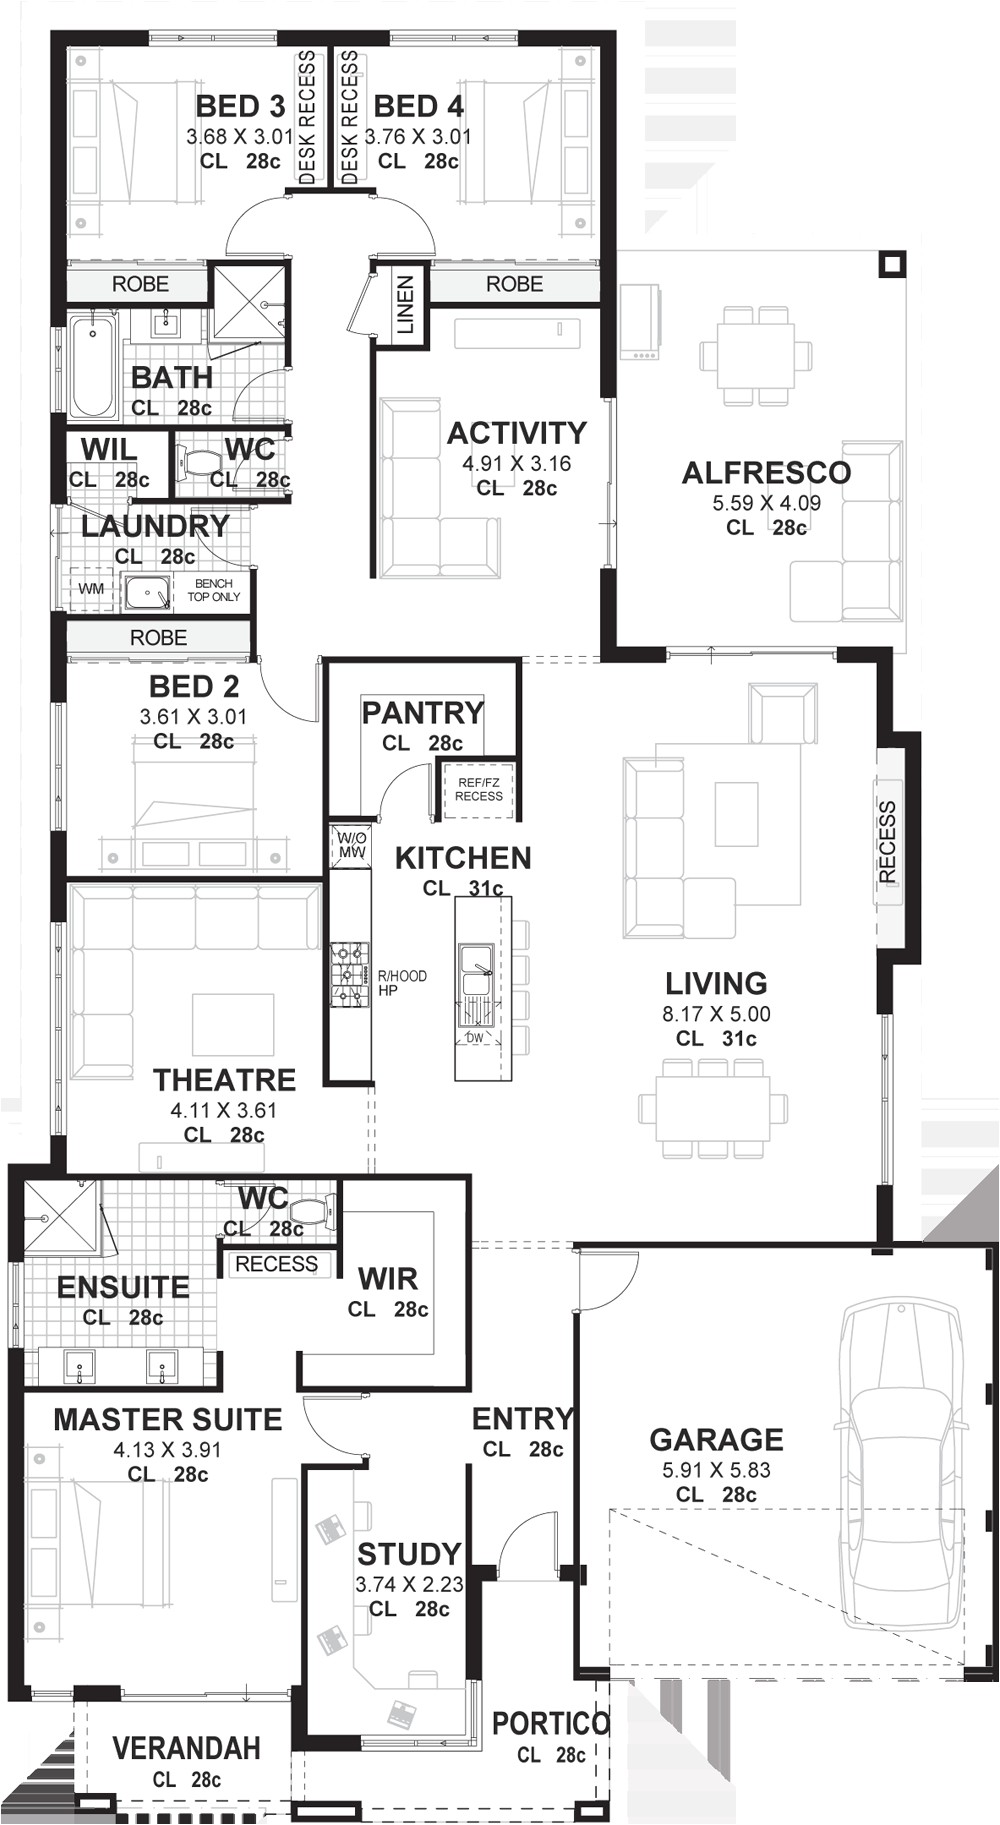 4 bedroom house plans designs